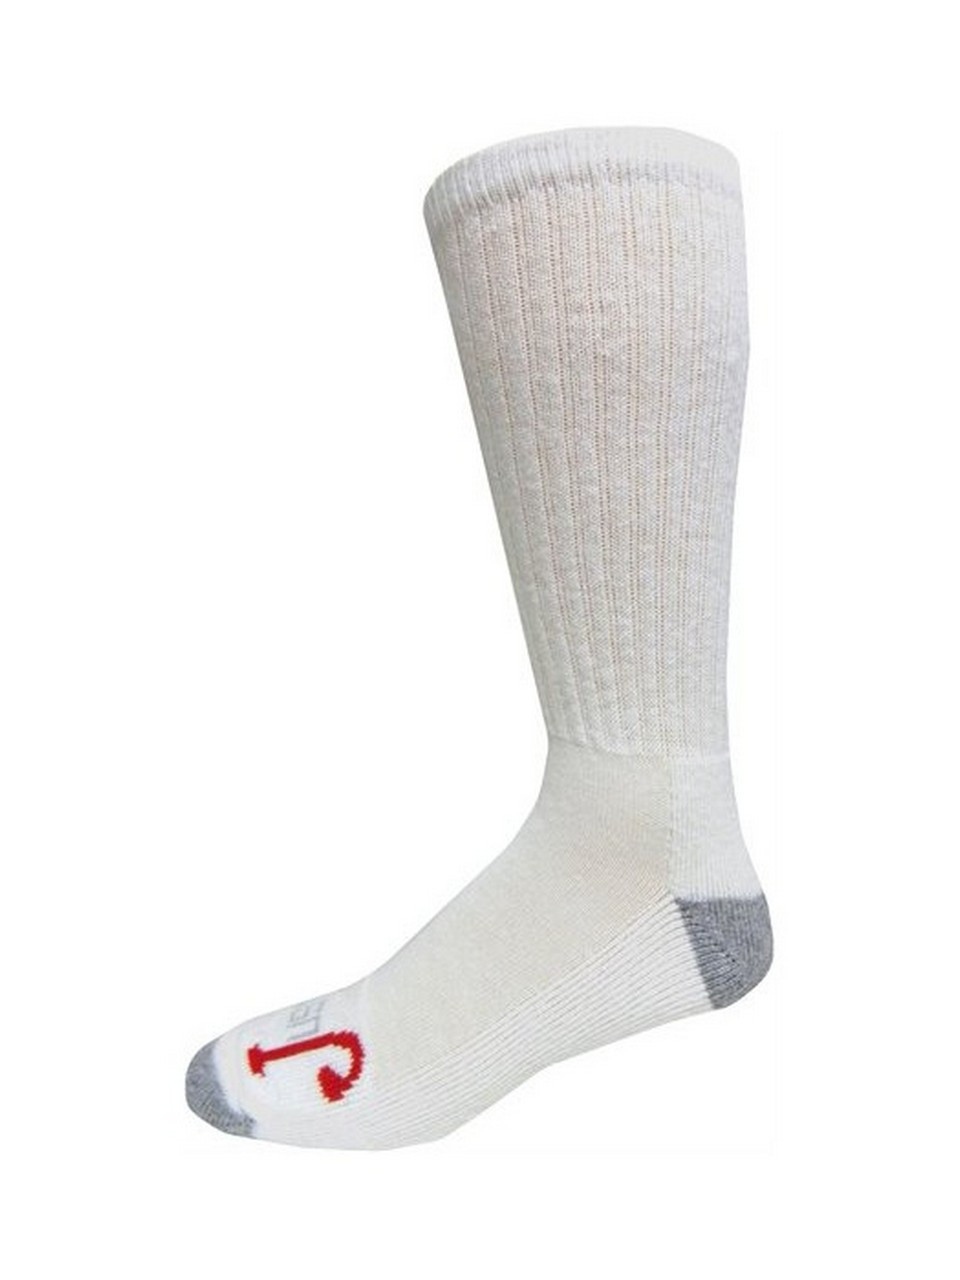 Socks Loose Fit Over the Calf White - 2BigFeet